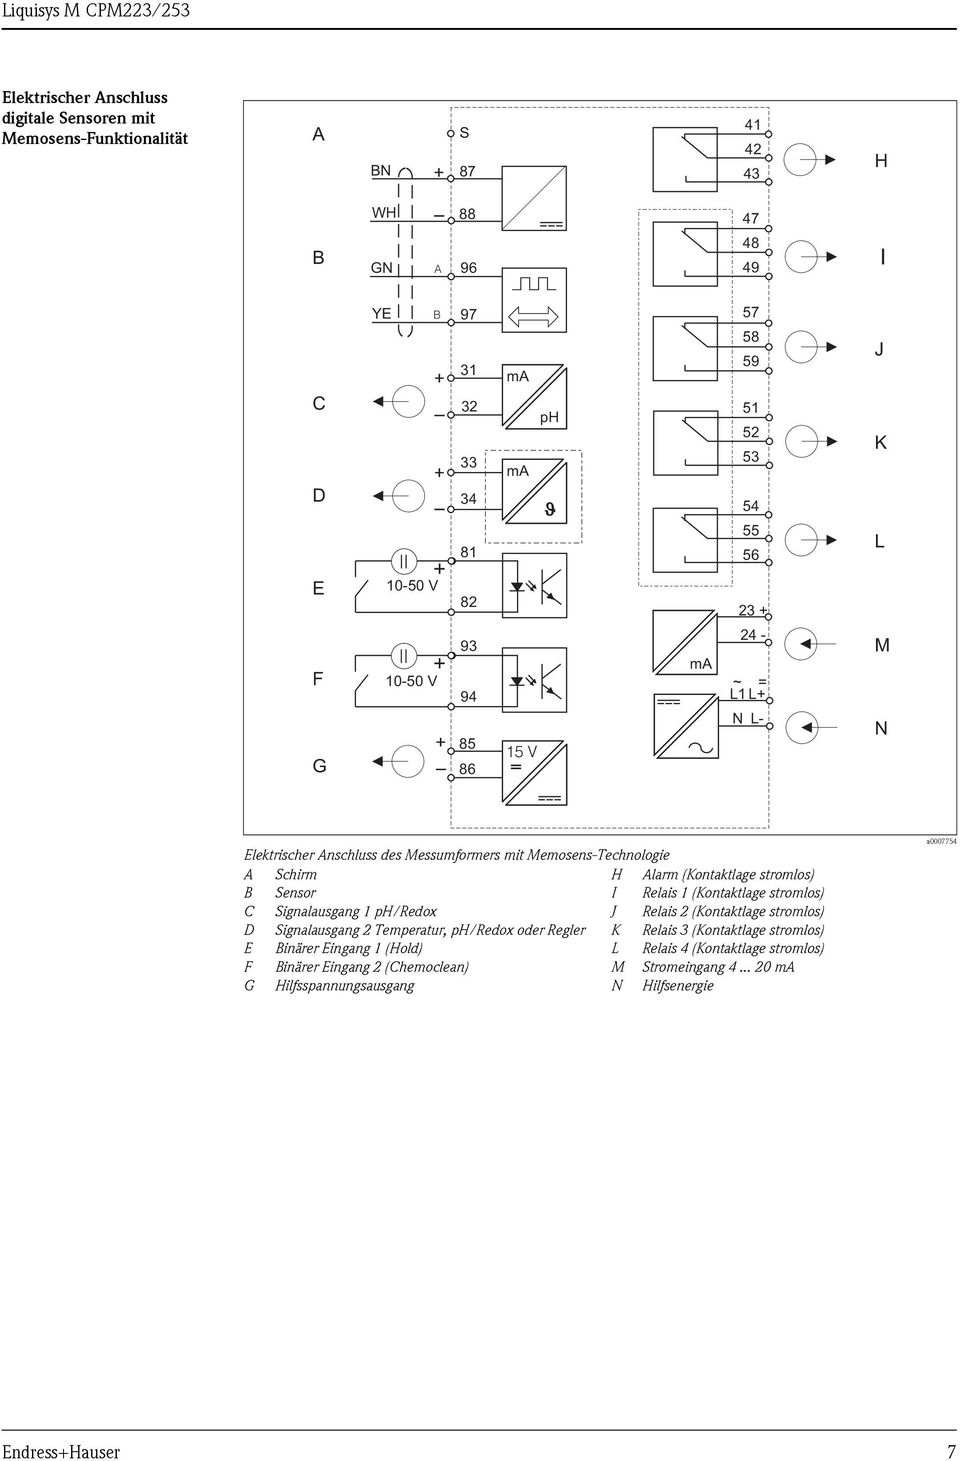 1 ph/redox Signalausgang 2 Temperatur, ph/redox oder Regler Binärer Eingang 1 (Hold) Binärer Eingang 2 (Chemoclean) Hilfsspannungsausgang H I J K L M N Alarm (Kontaktlage stromlos)